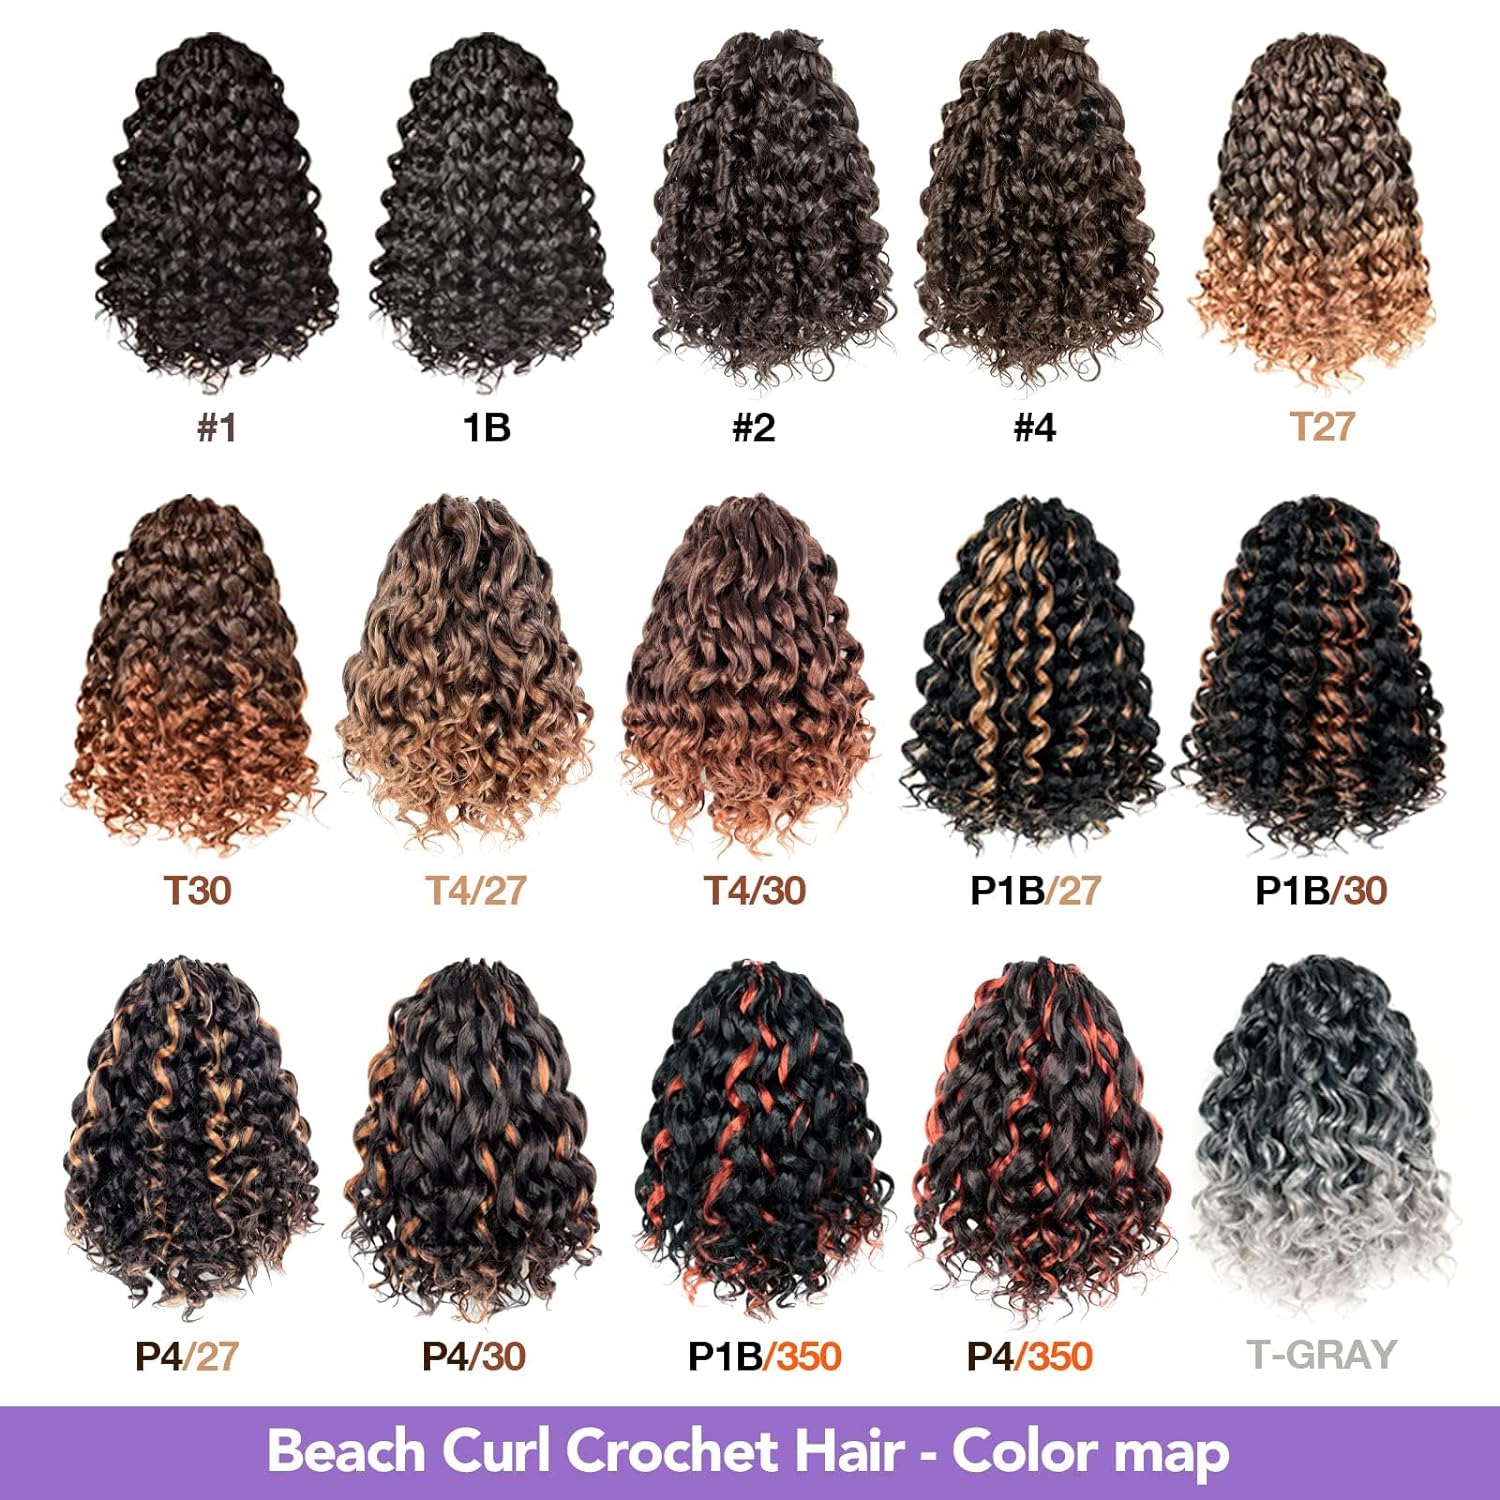 FAST SHIPPING 3-5 DAY BC | Toyotress Beach Curl Crochet Hair - 8 Packs Crochet Hair, Short Curly Beach Wave Wavy Braids For Black Women Synthetic Braiding Hair Extensions